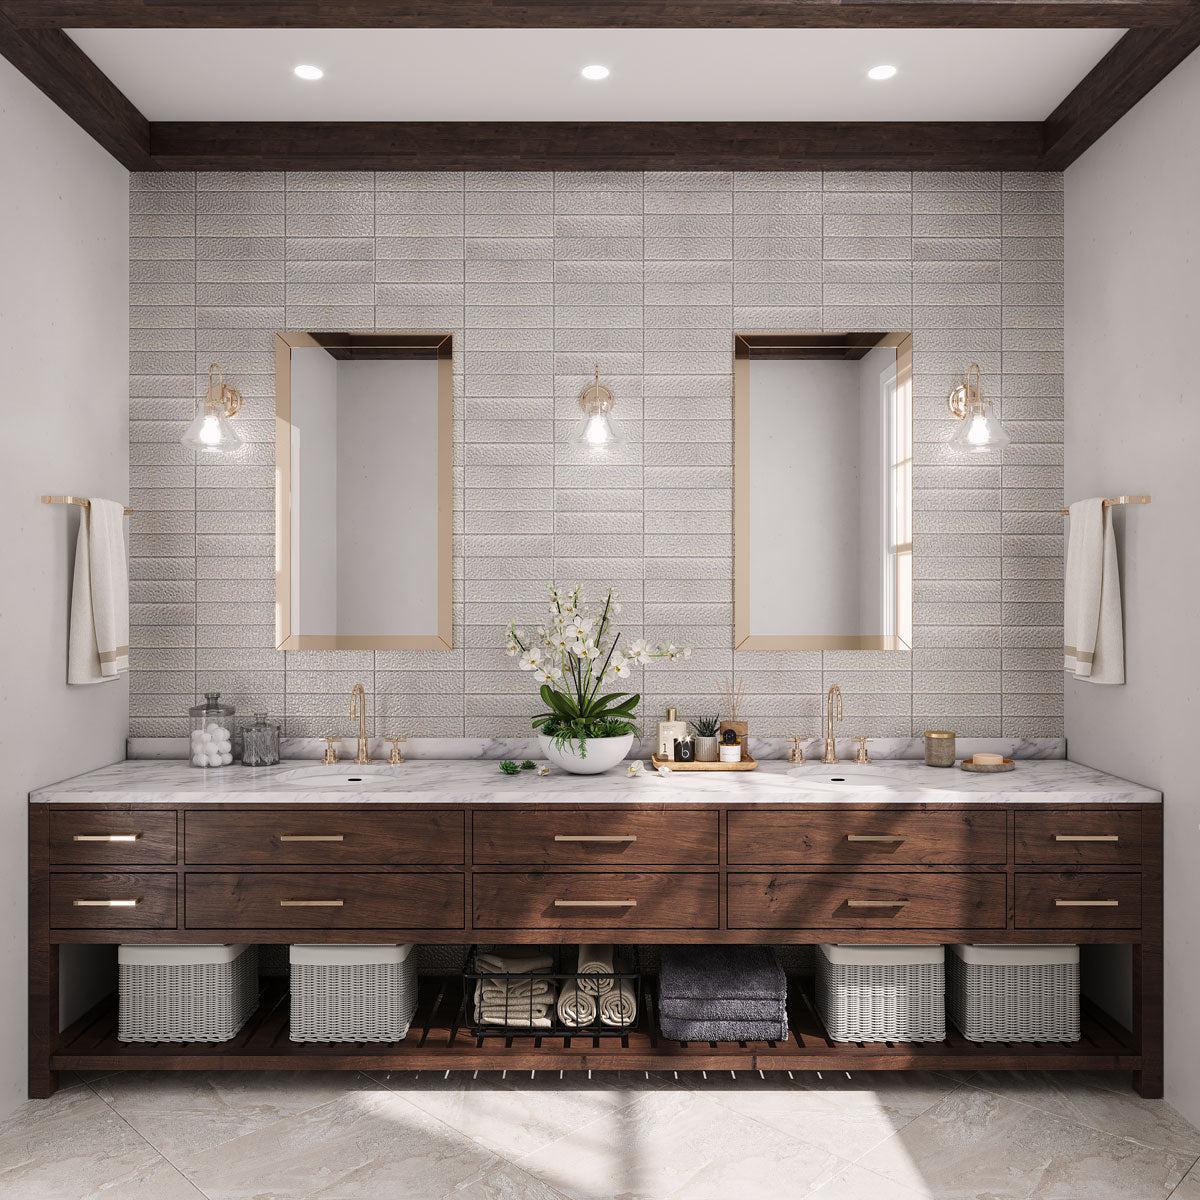 Elegant bathroom with Laguna Pearl glass subway tile backsplash and wood vanity with gold fixtures